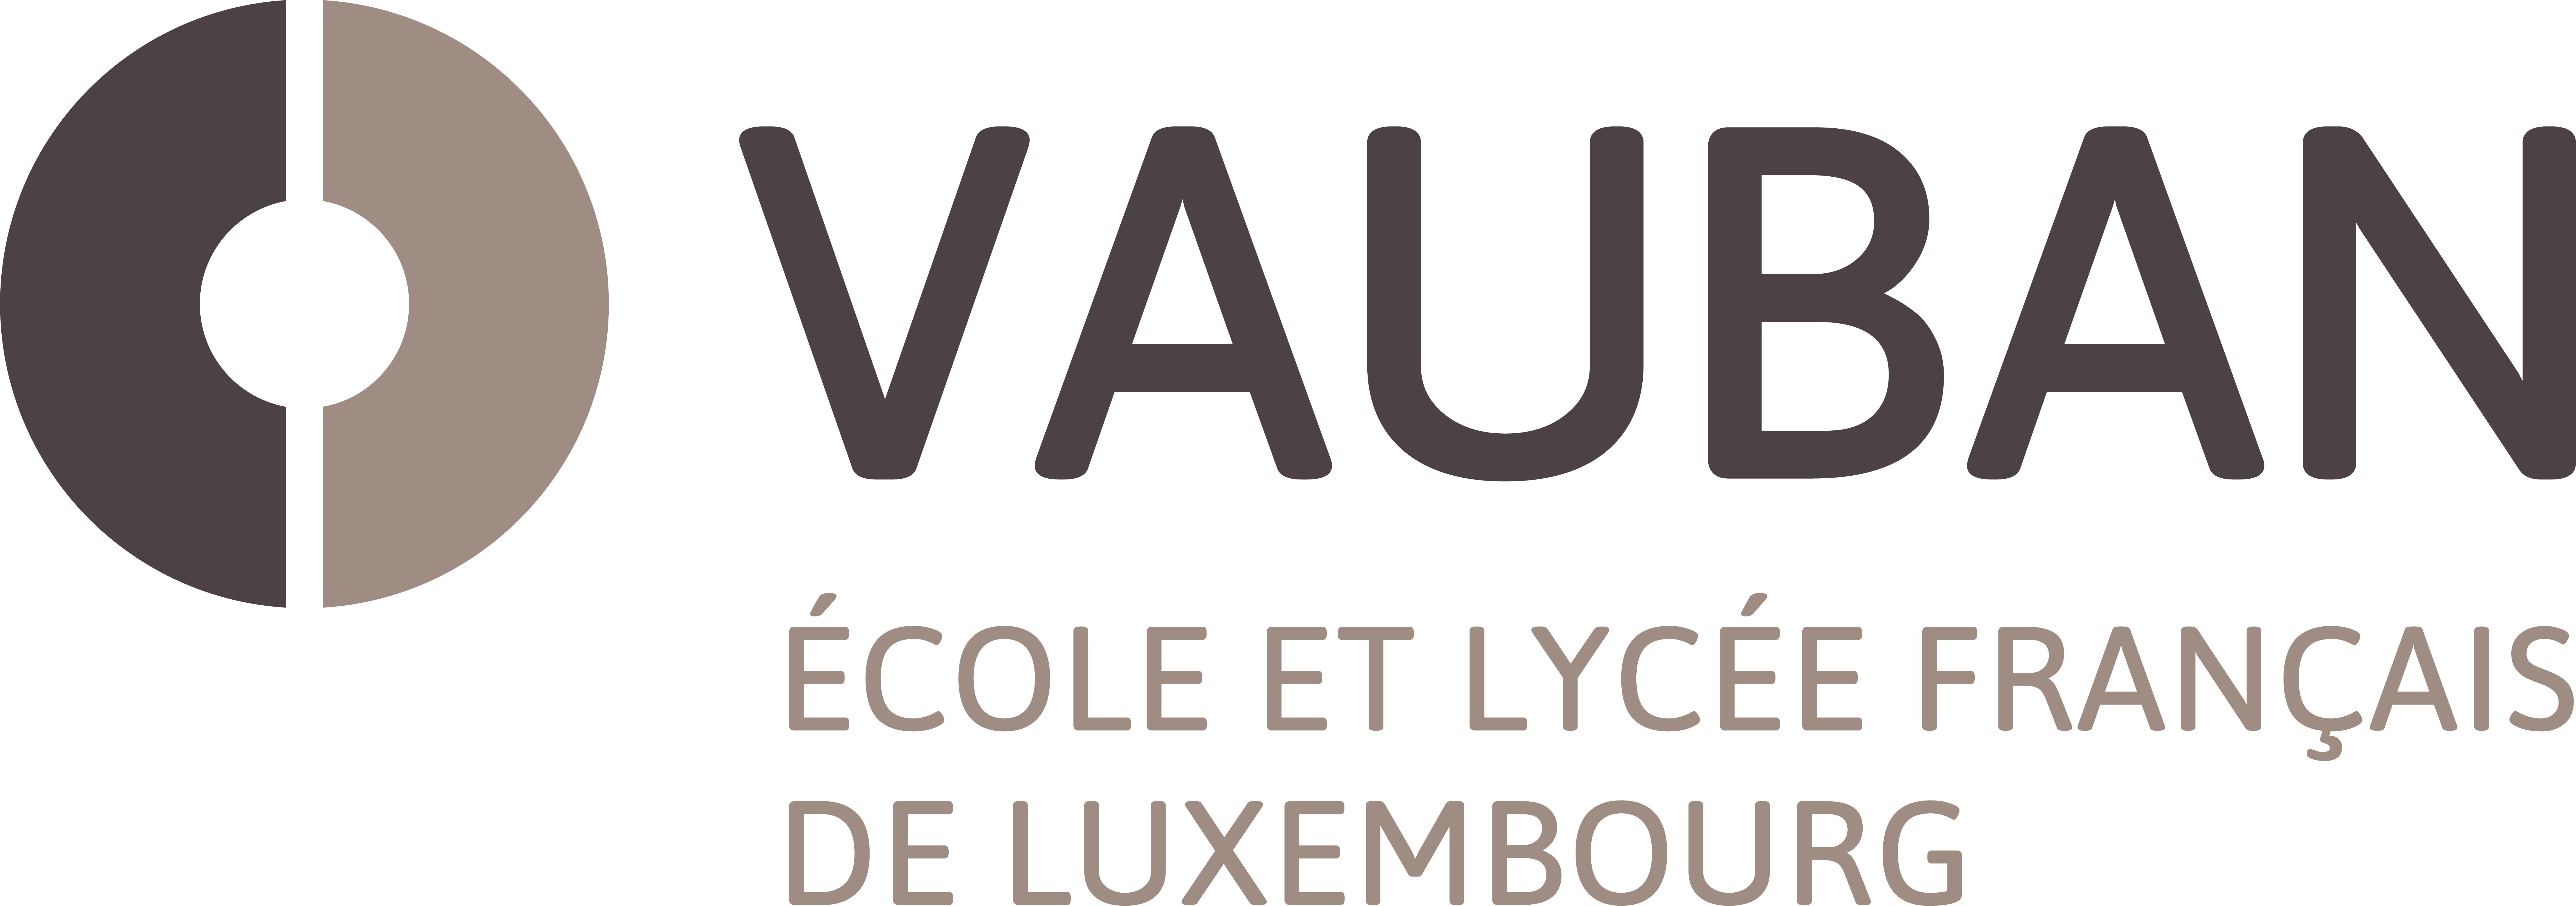 Logo Lycée Vauban